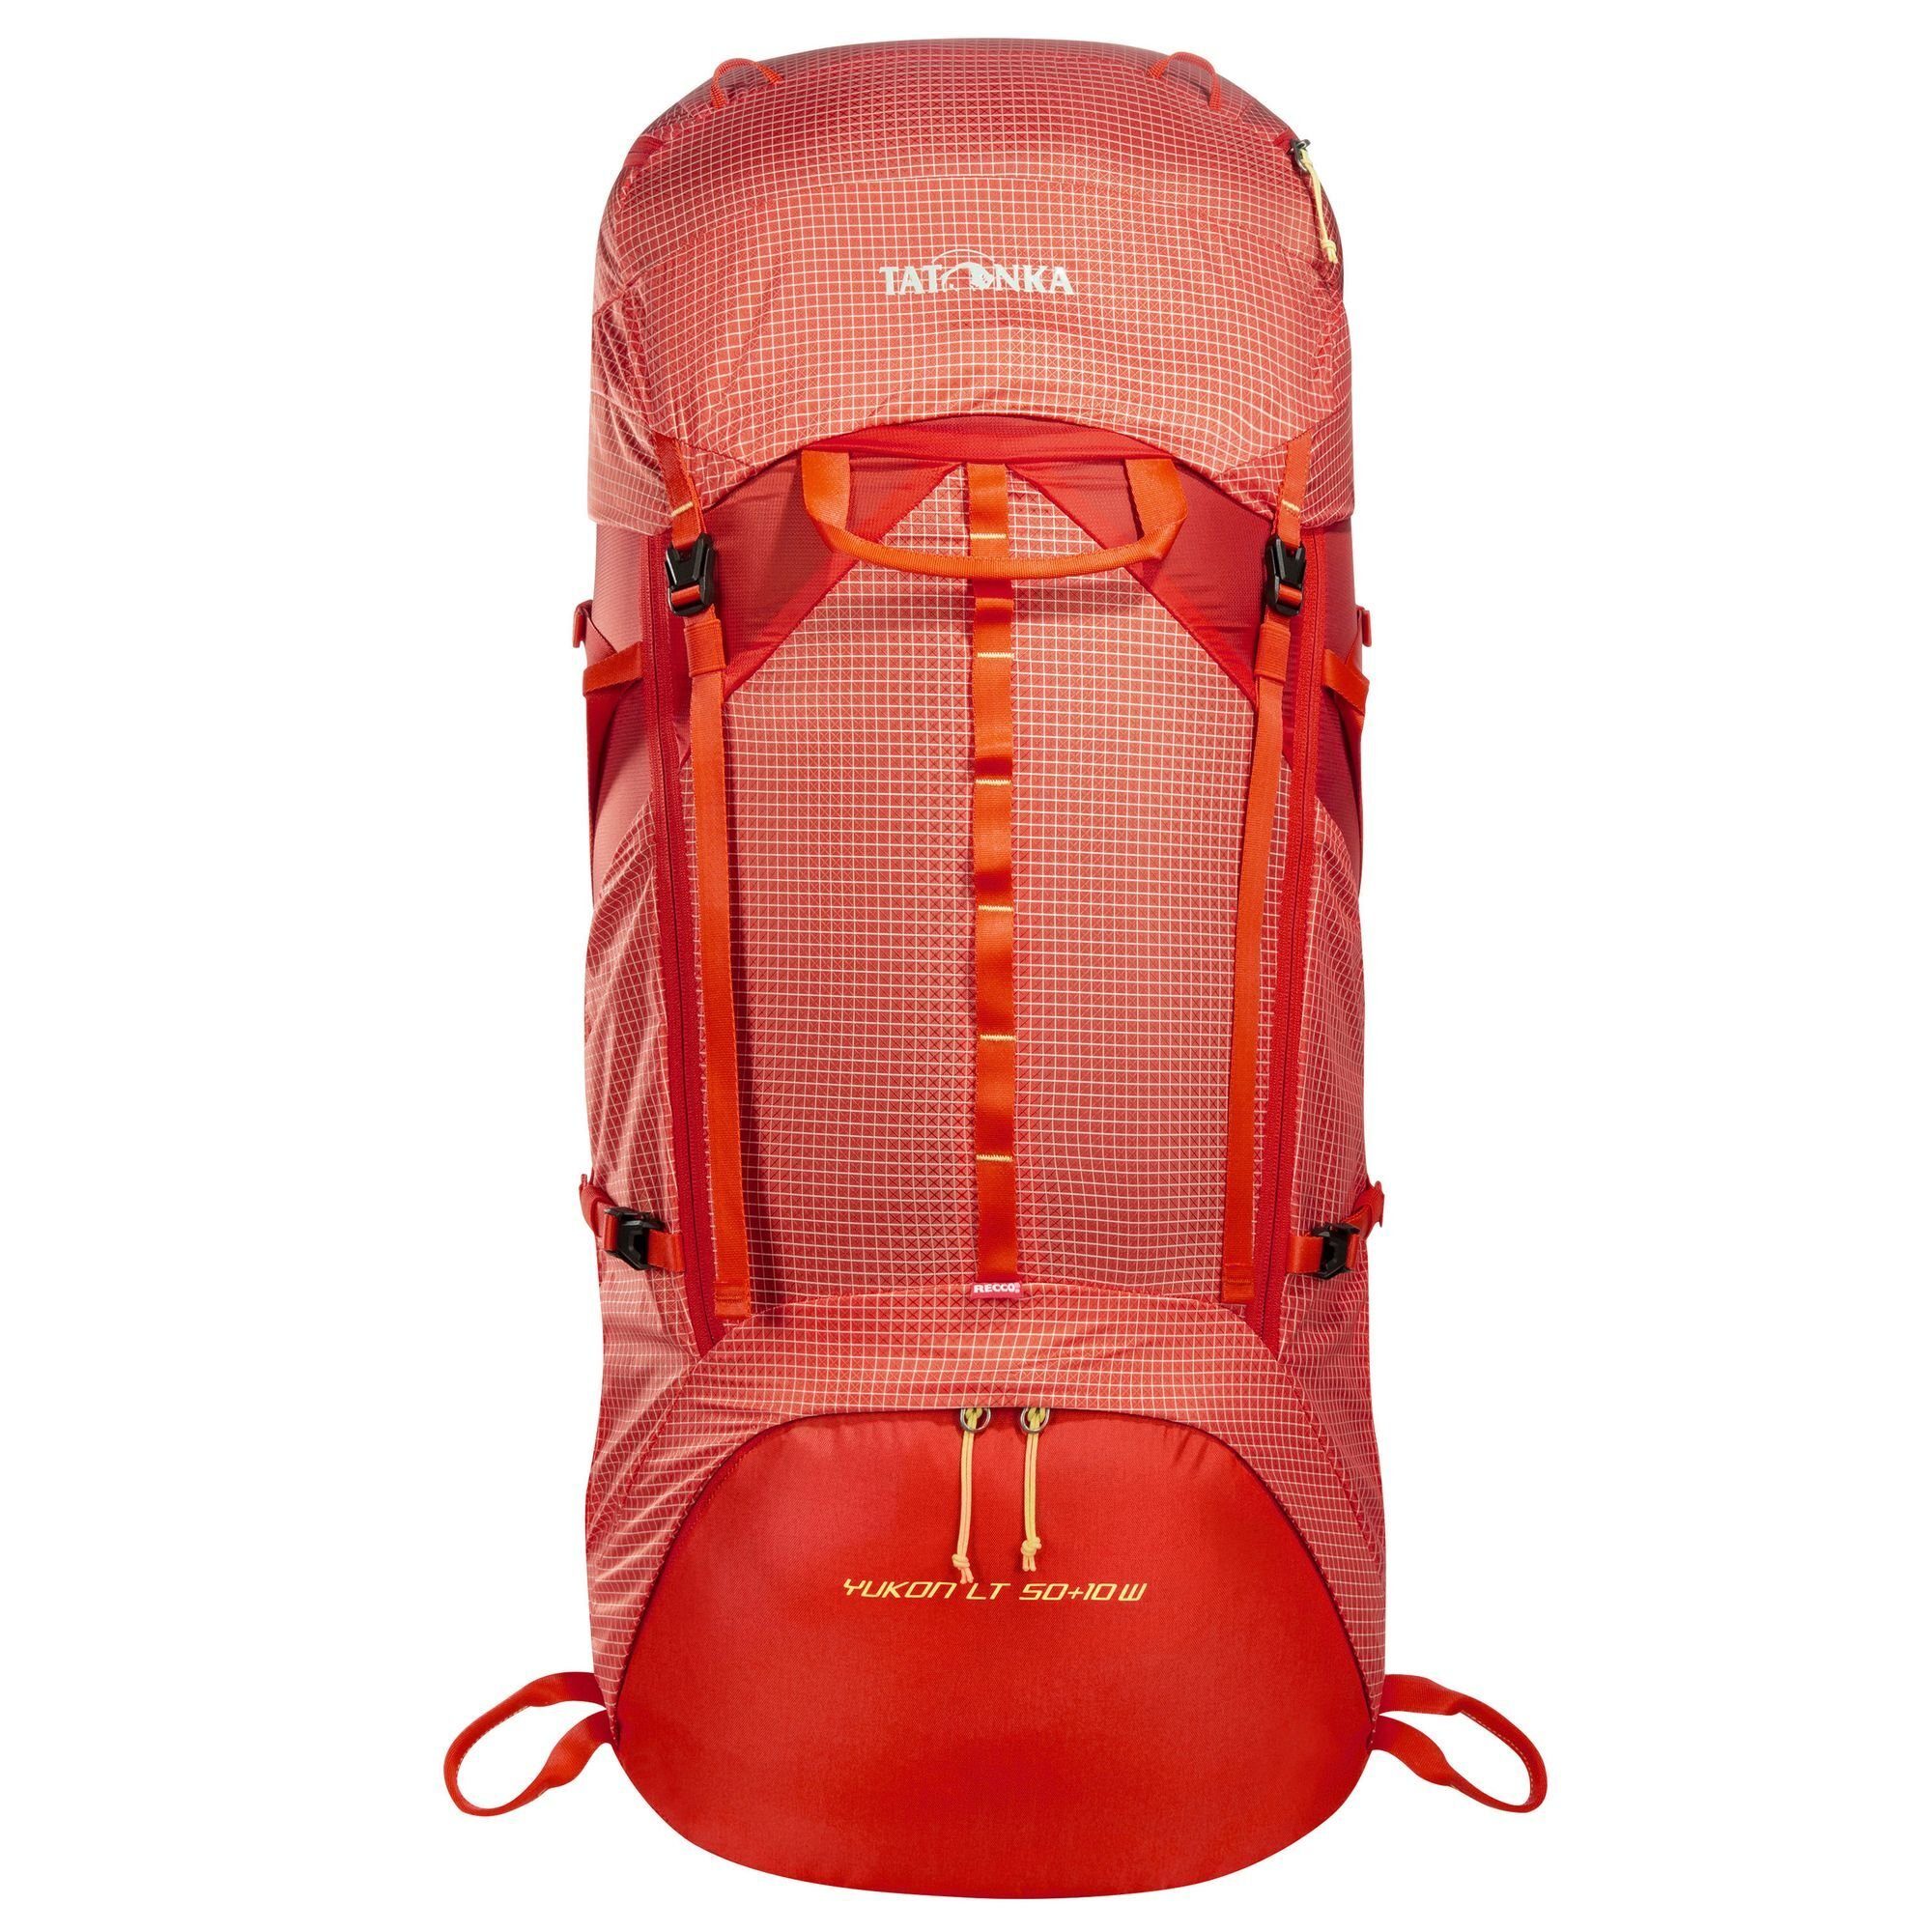 Sportrucksack red Polyamid TATONKA® orange Yukon,